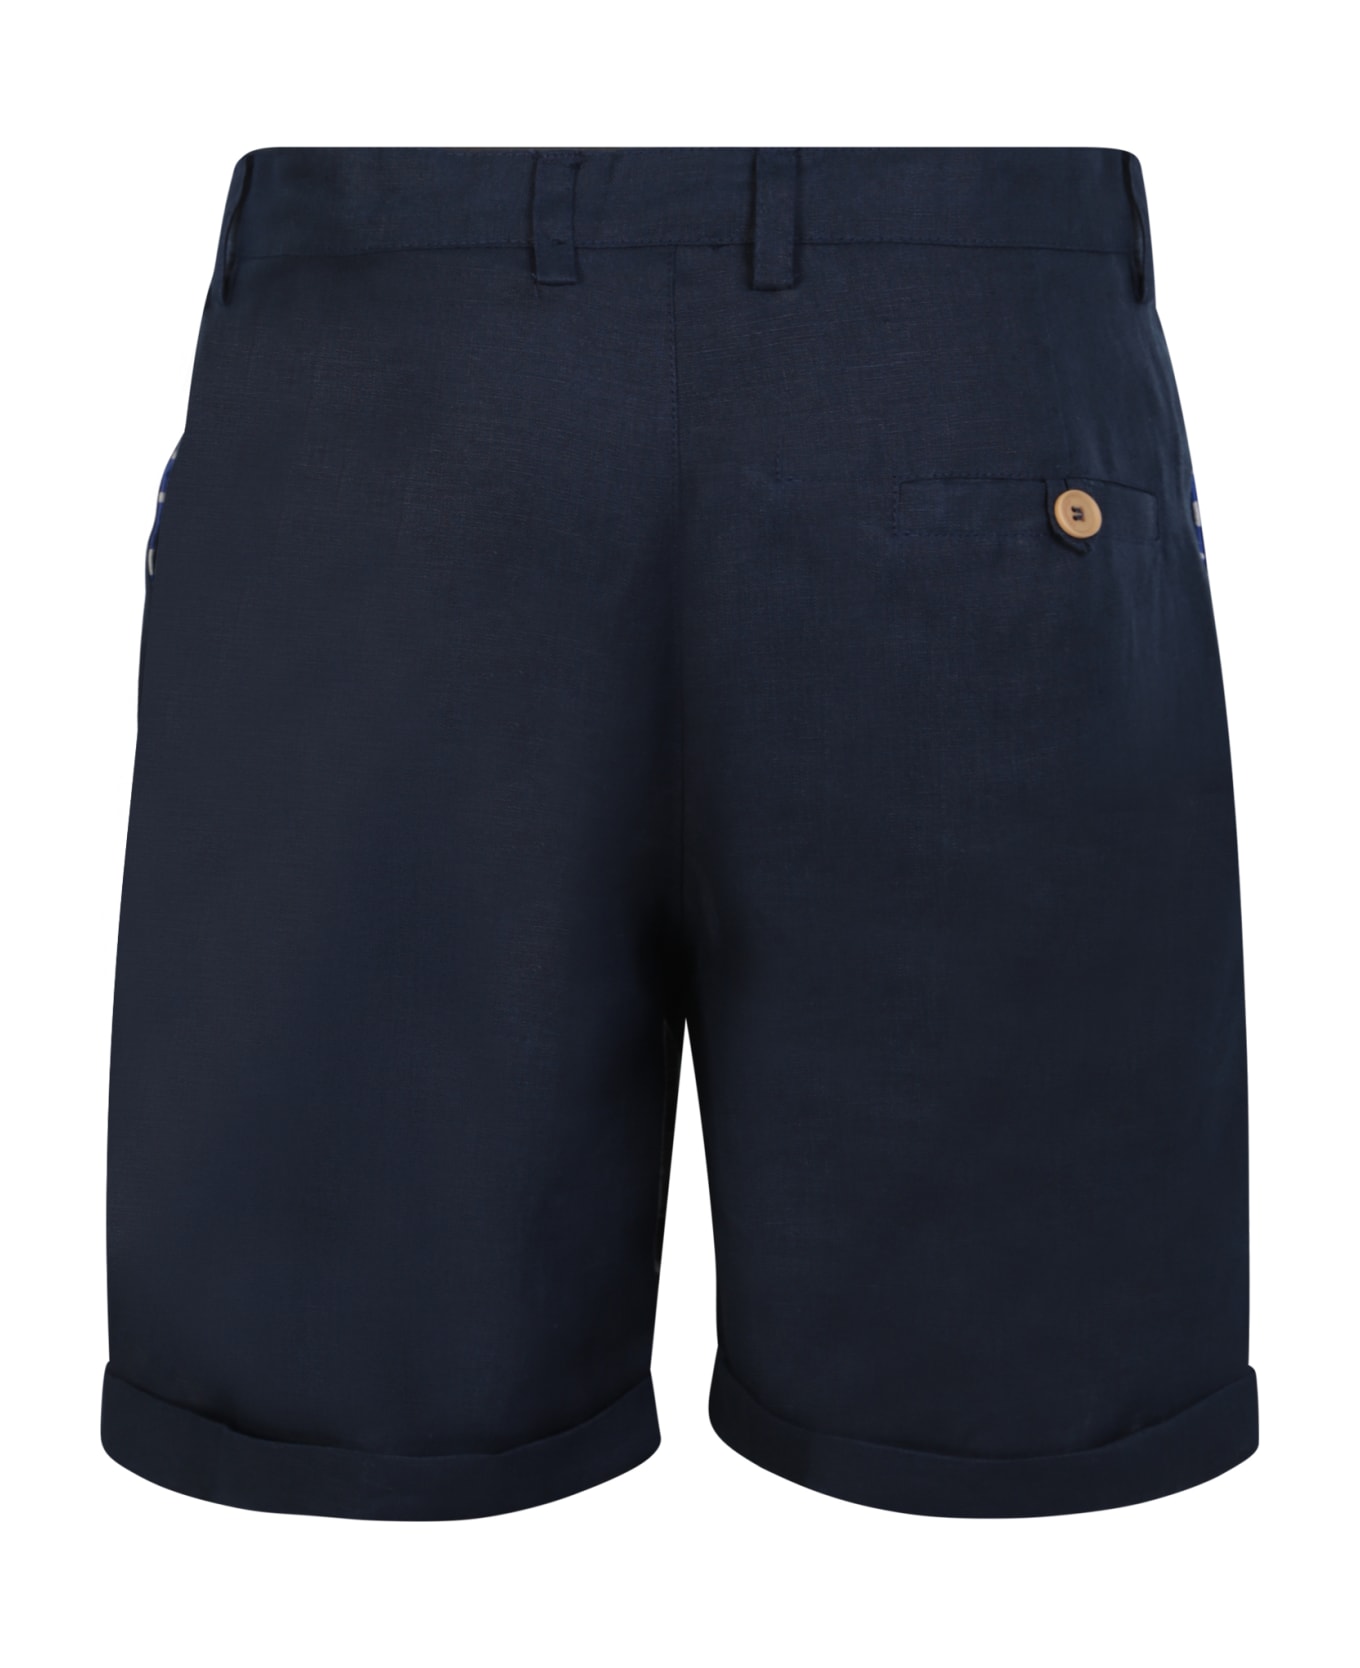 Peninsula Swimwear Stromboli Linen Black Shorts - Blue